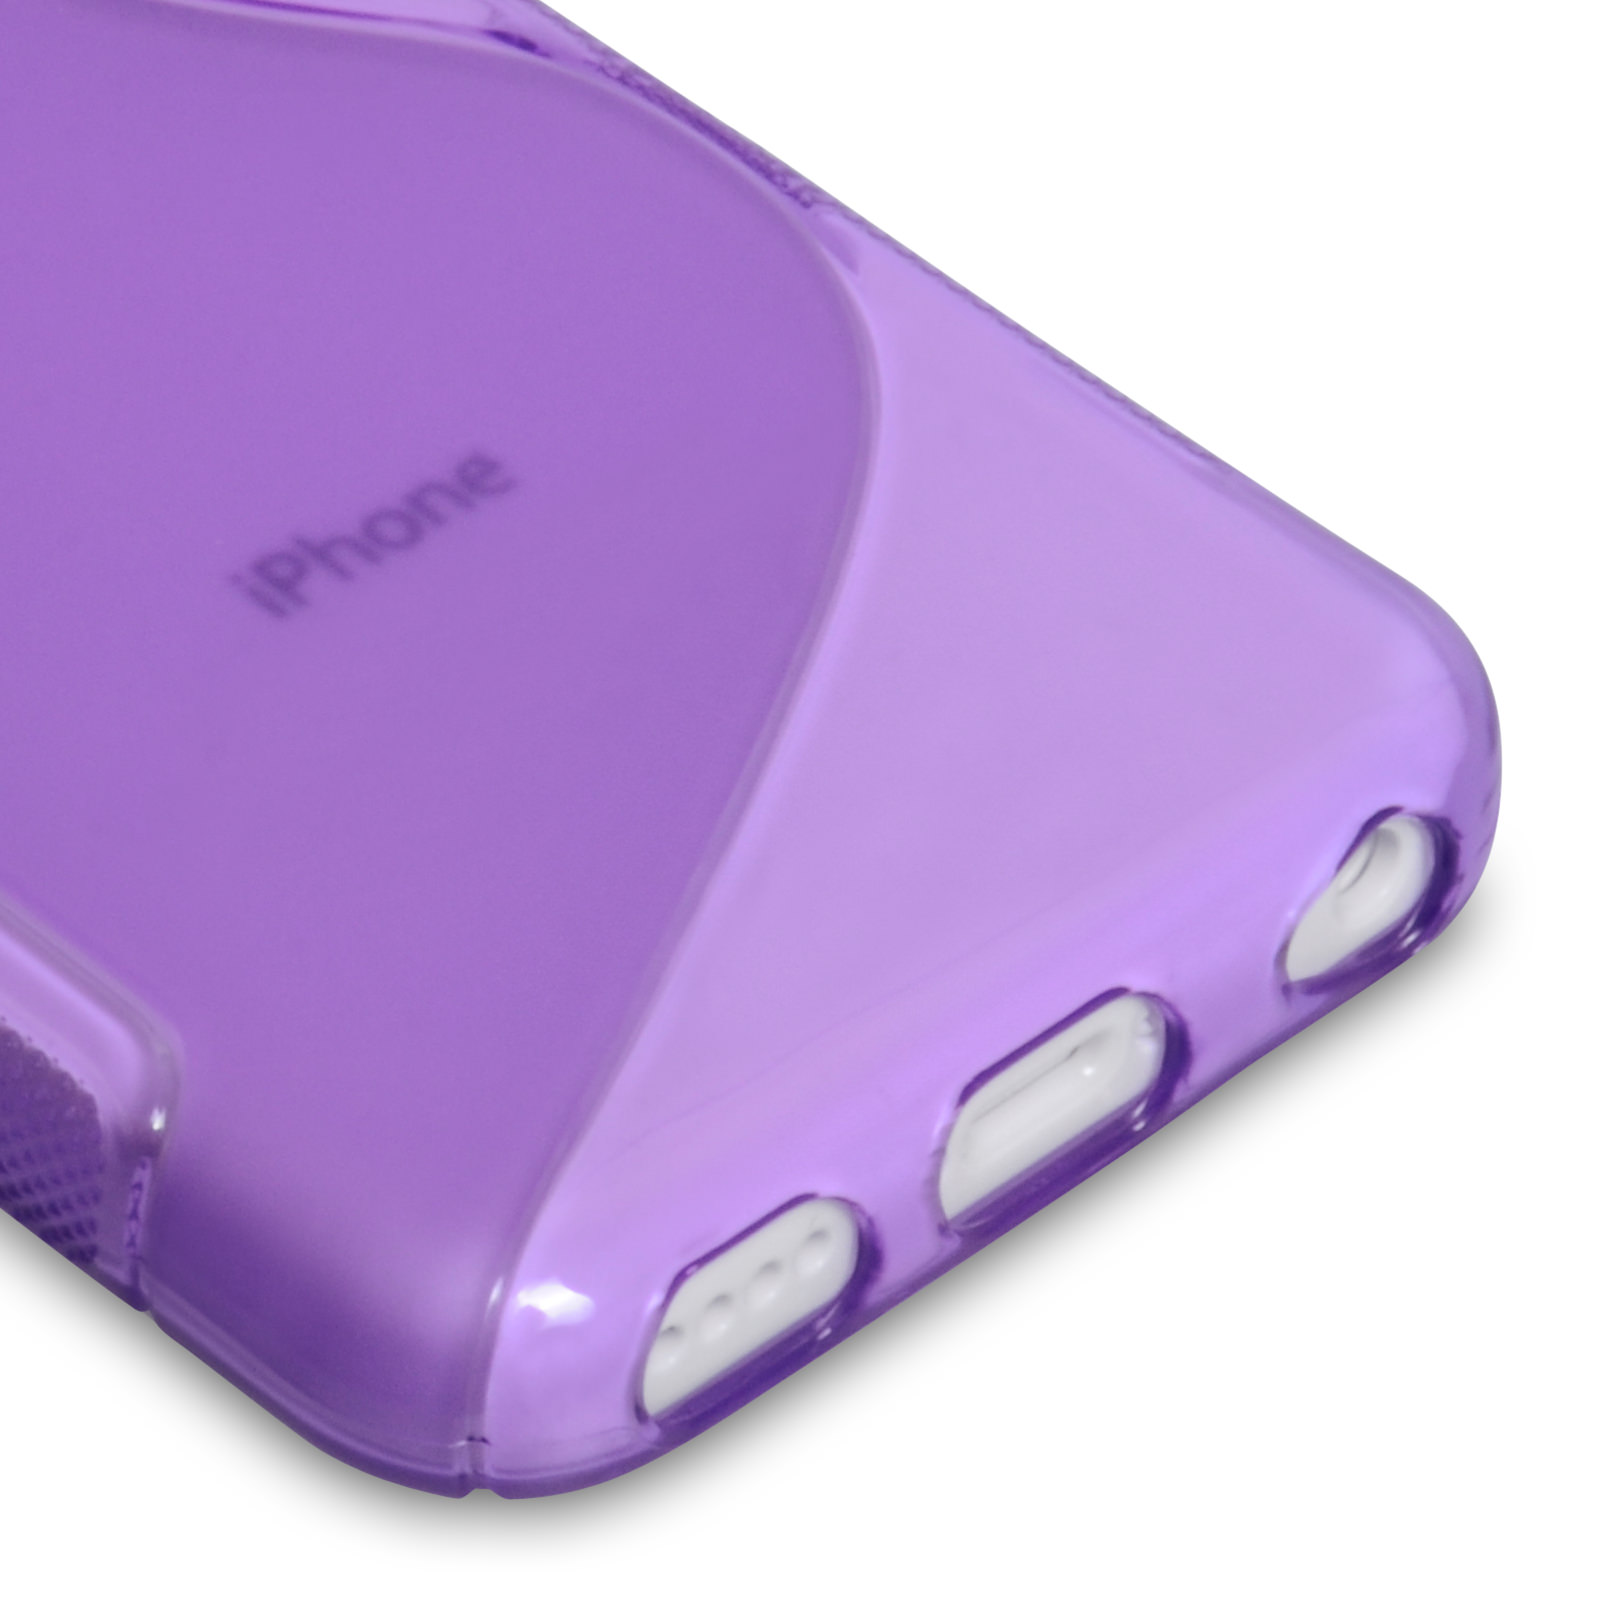 Caseflex iPhone 5c Silicone Gel S-Line Case - Purple